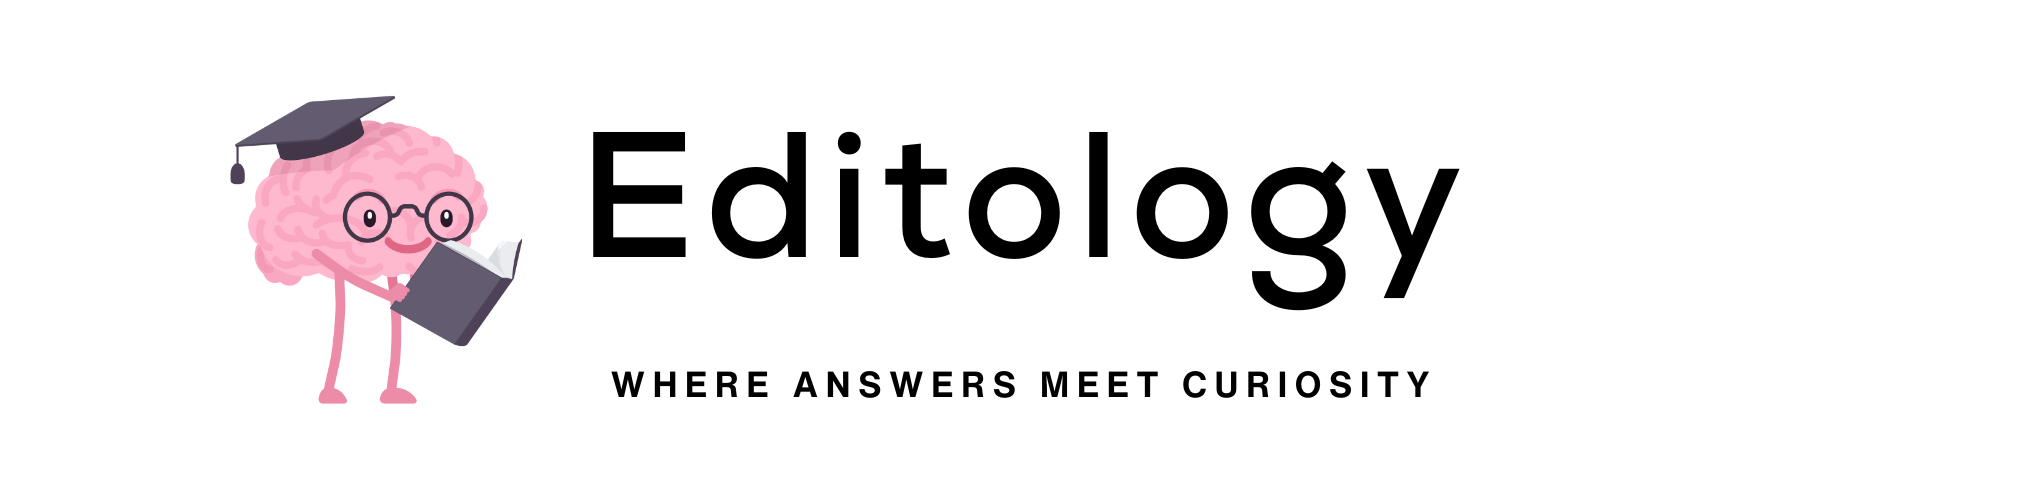 Editology: Where answers meet curiosity